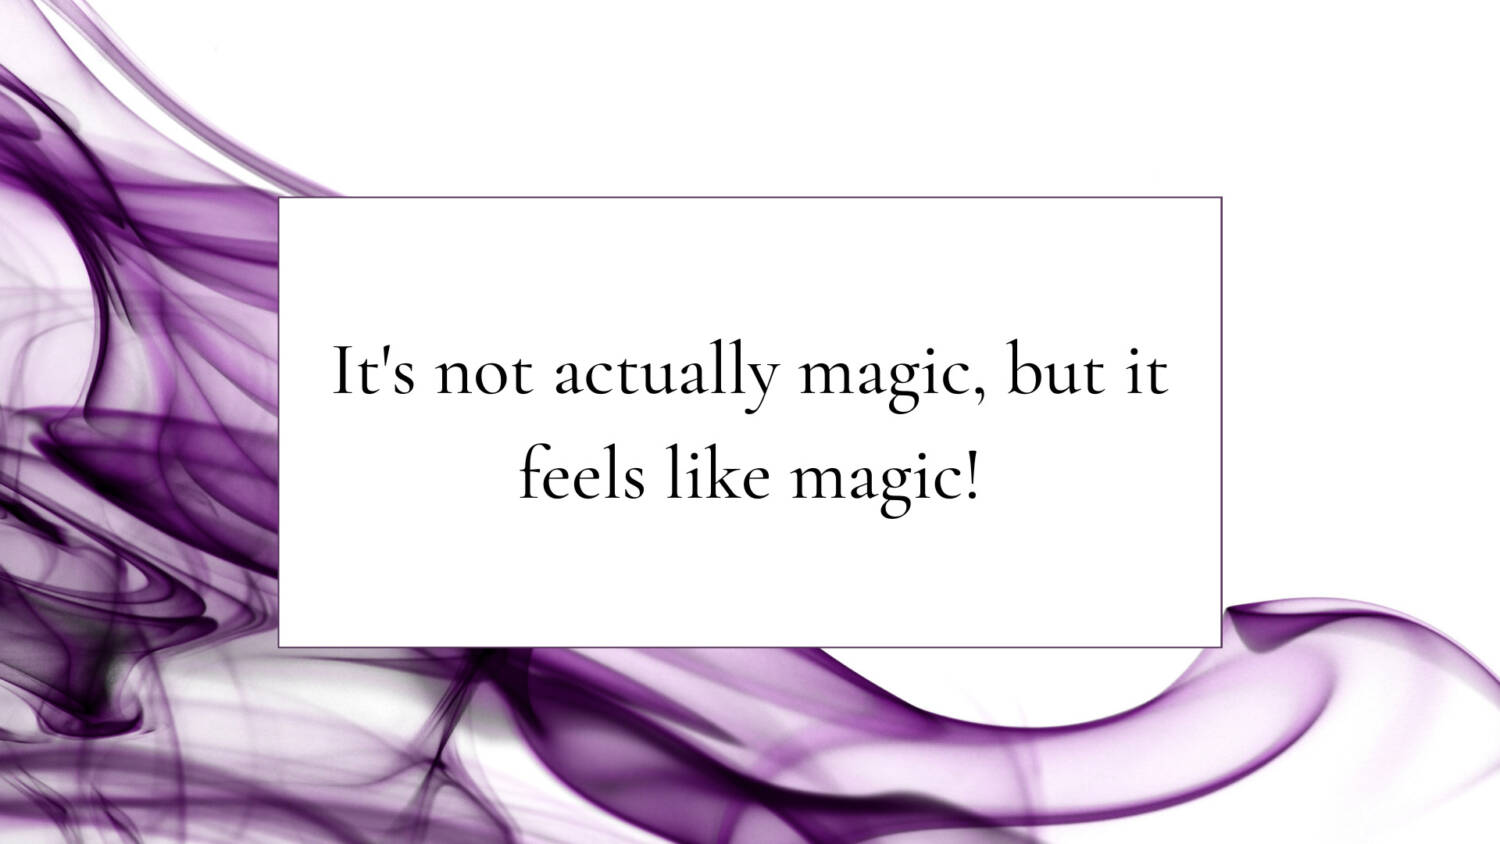 It's not actually magic, but it feels like magic!